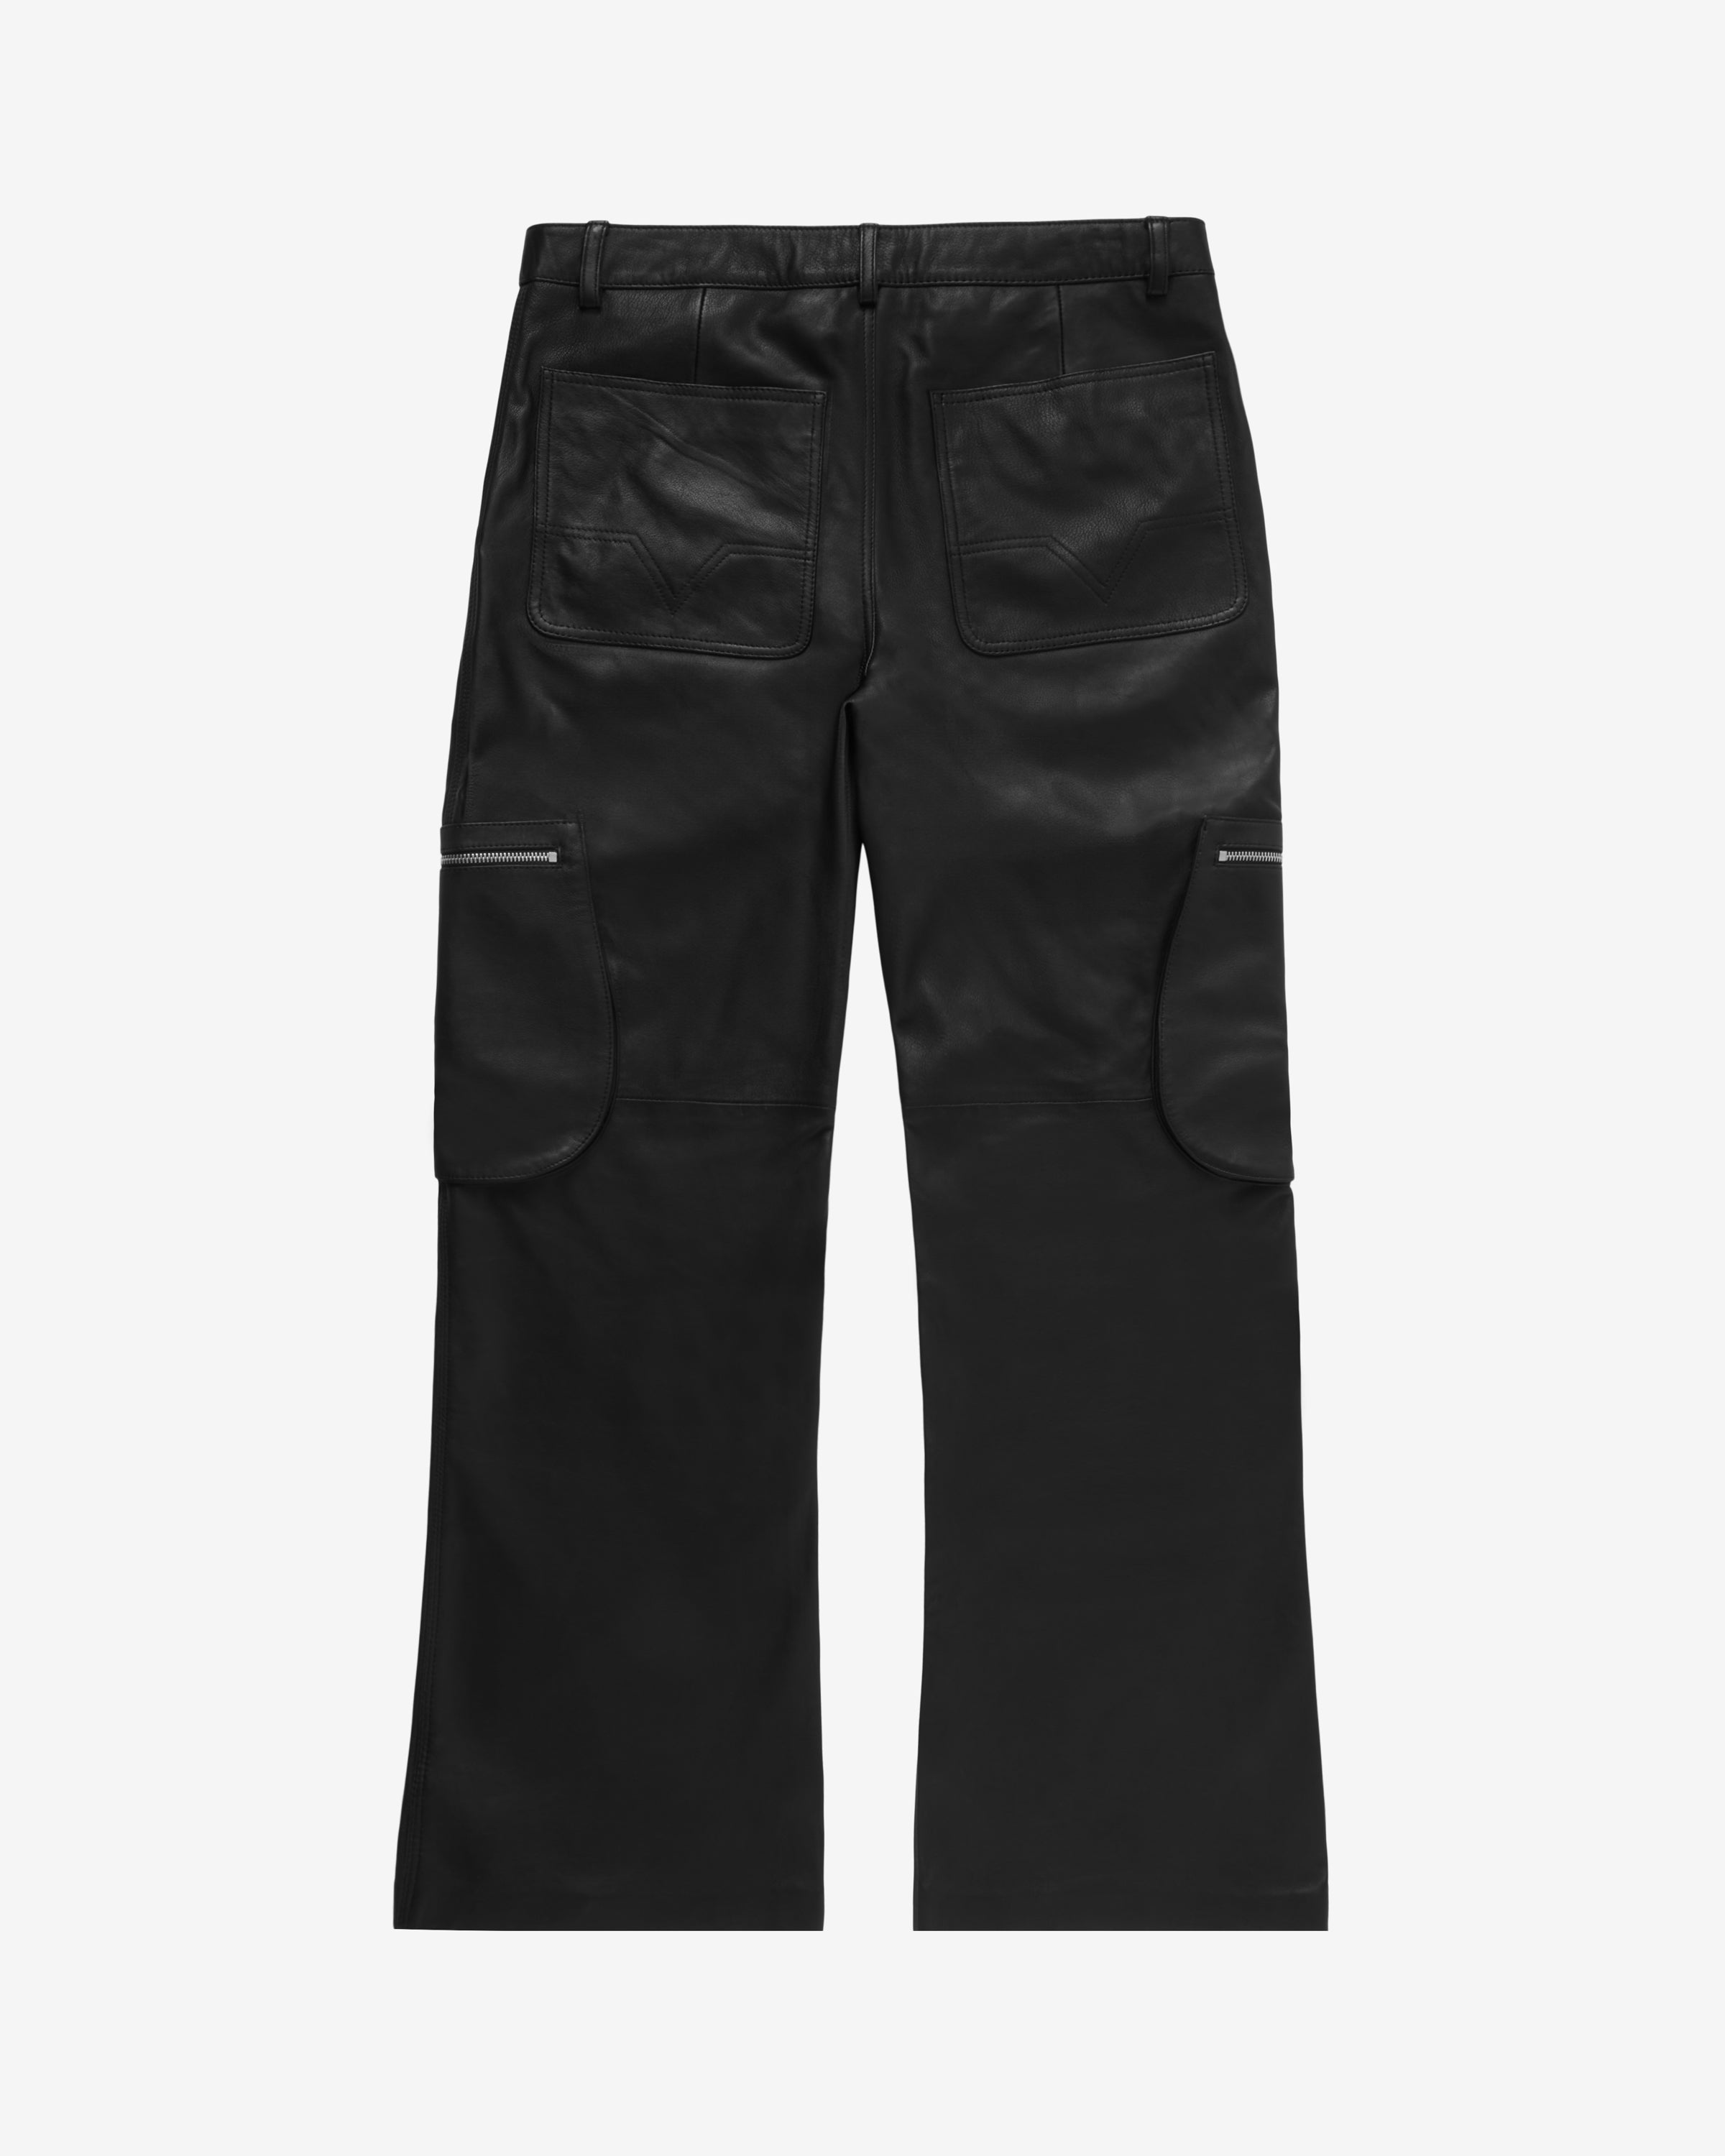 3-D Leather Cargo Pants